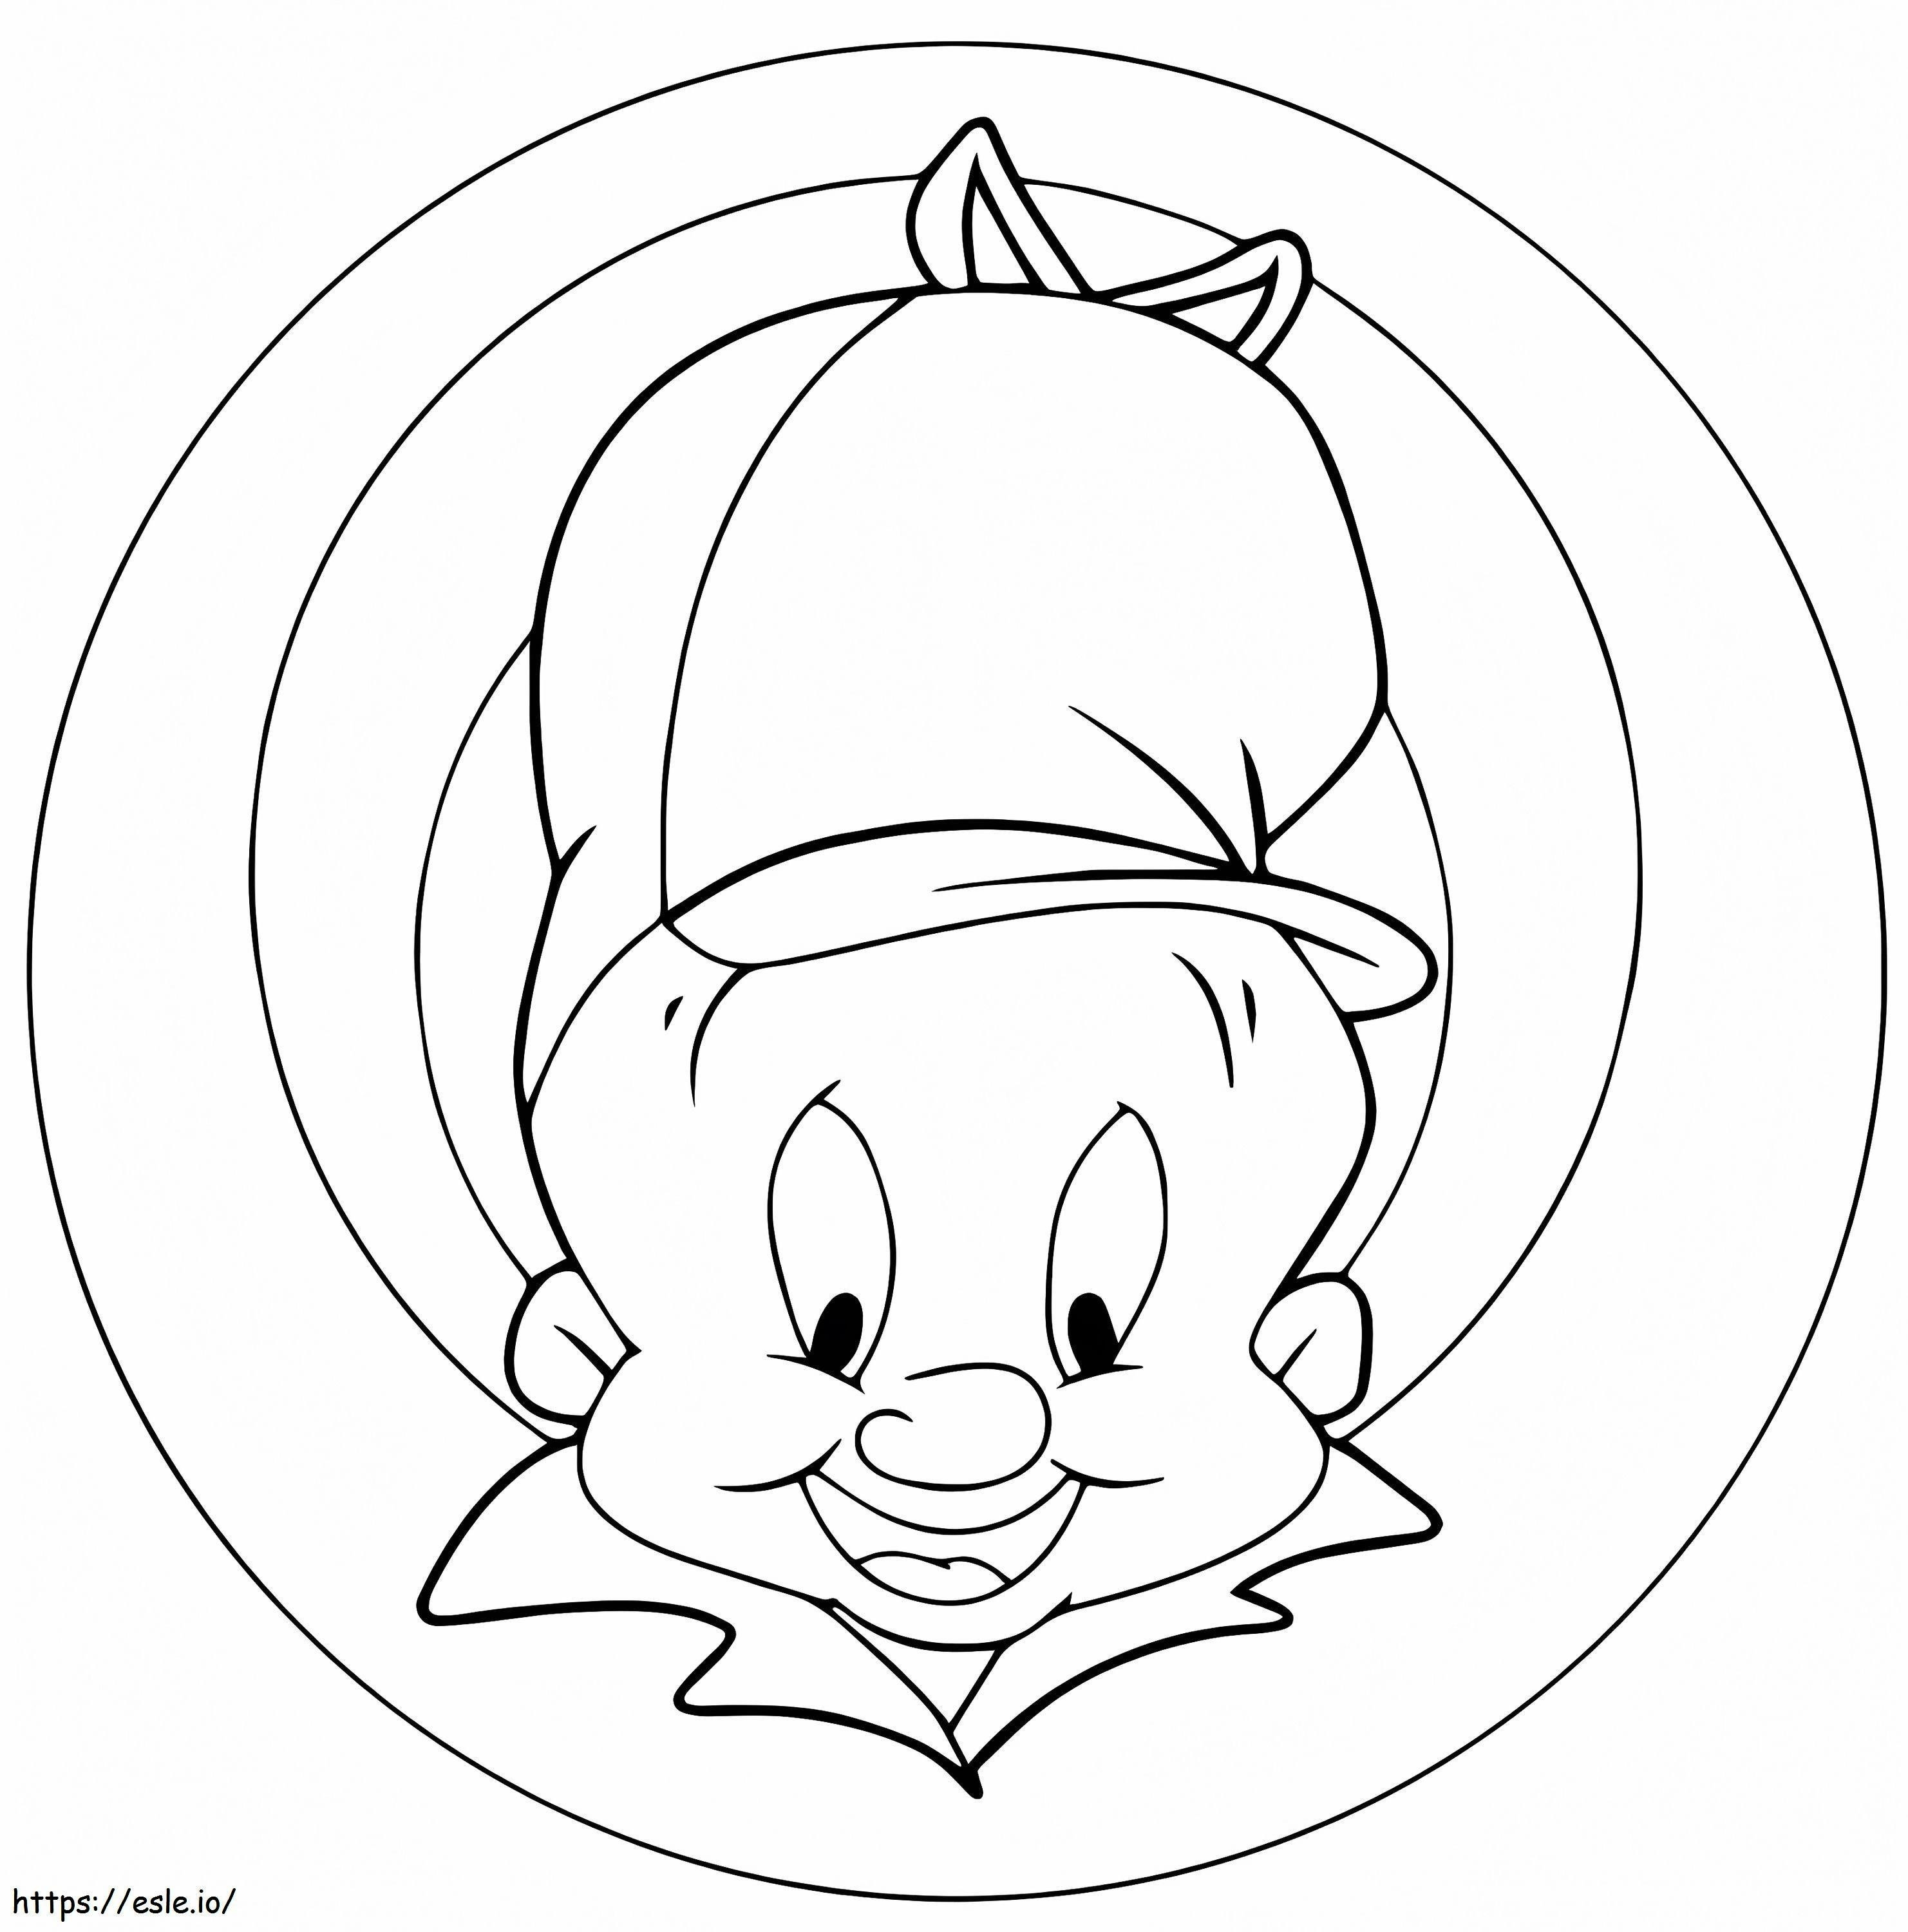 Looney Tunes Elmer Fudd coloring page